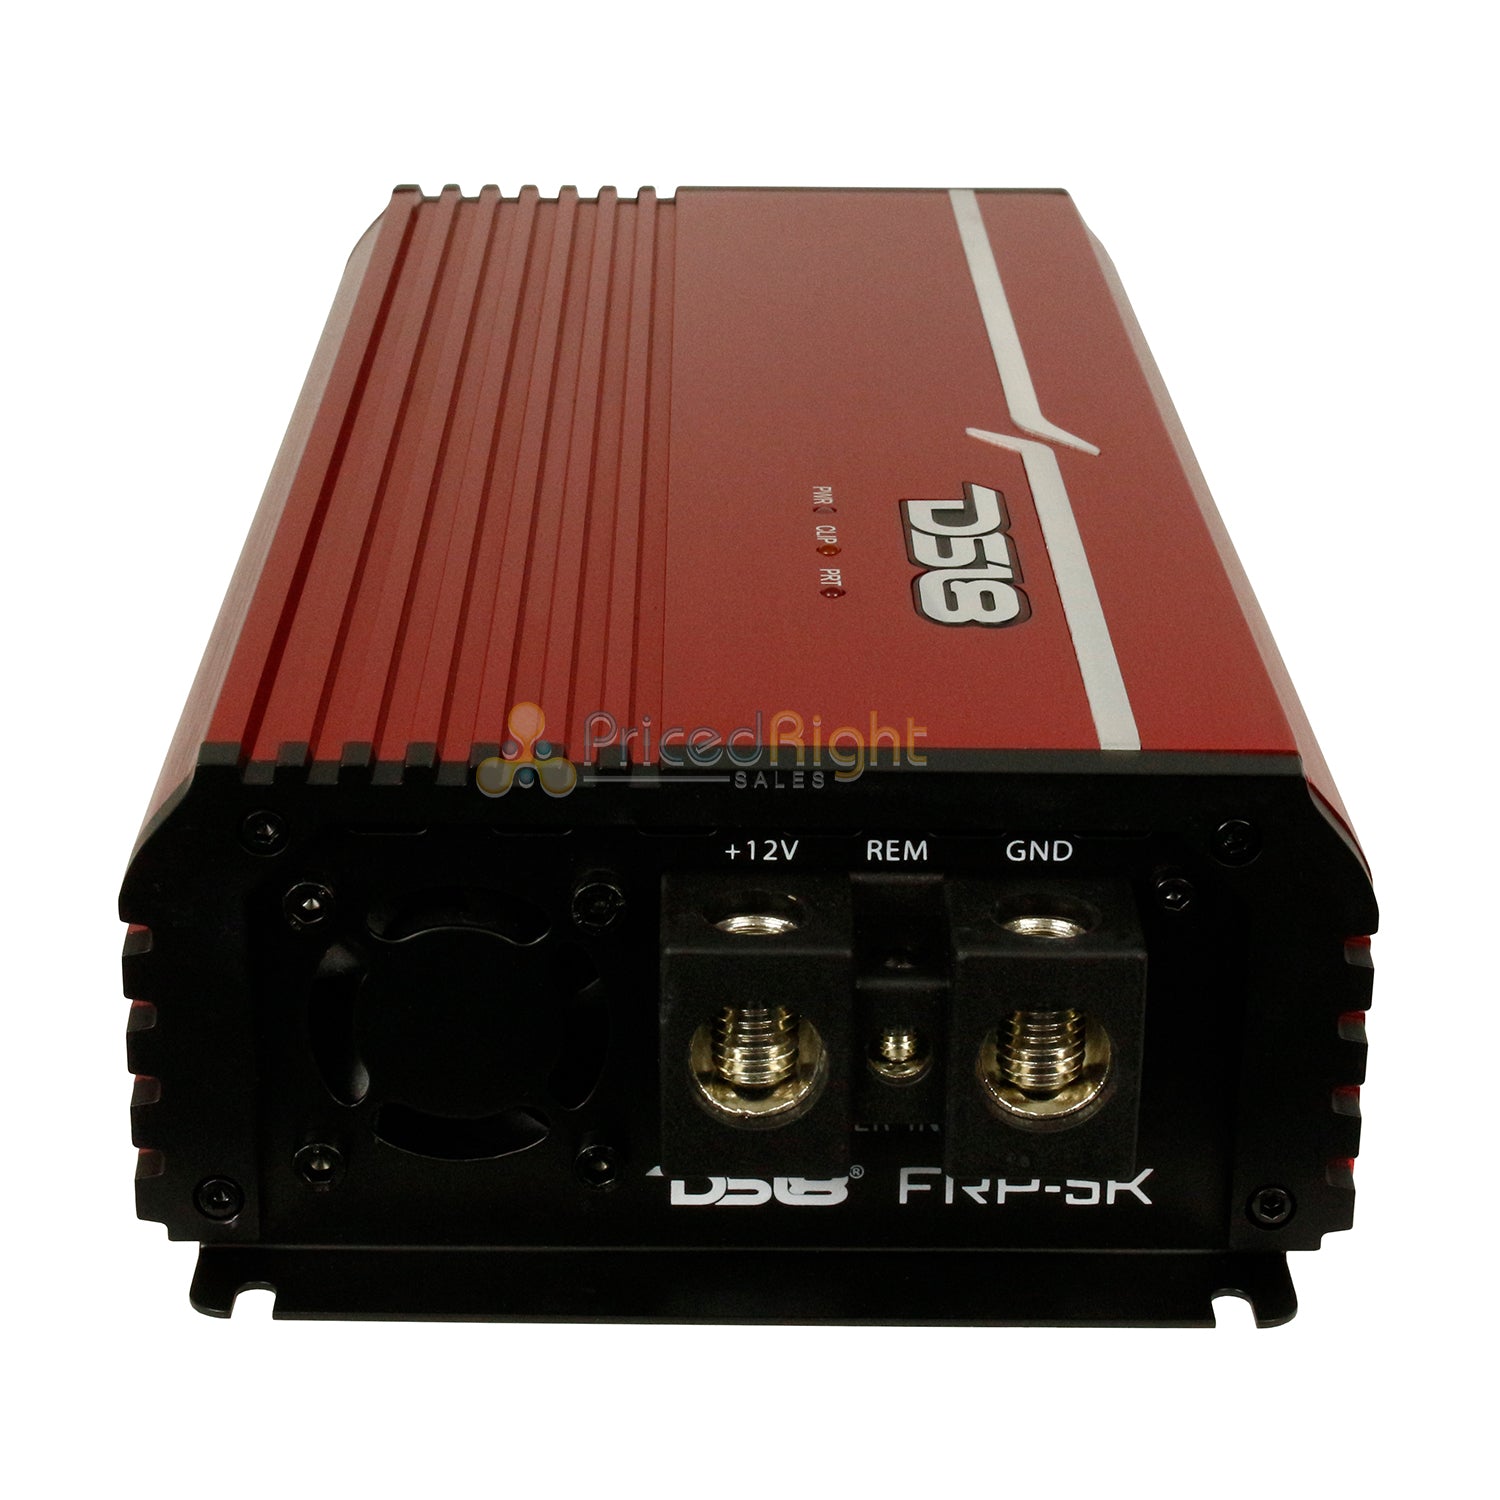 DS18 FRP Compact Full Range Class D Monoblock Audio Amplifier 5000W 1 Ohm Red